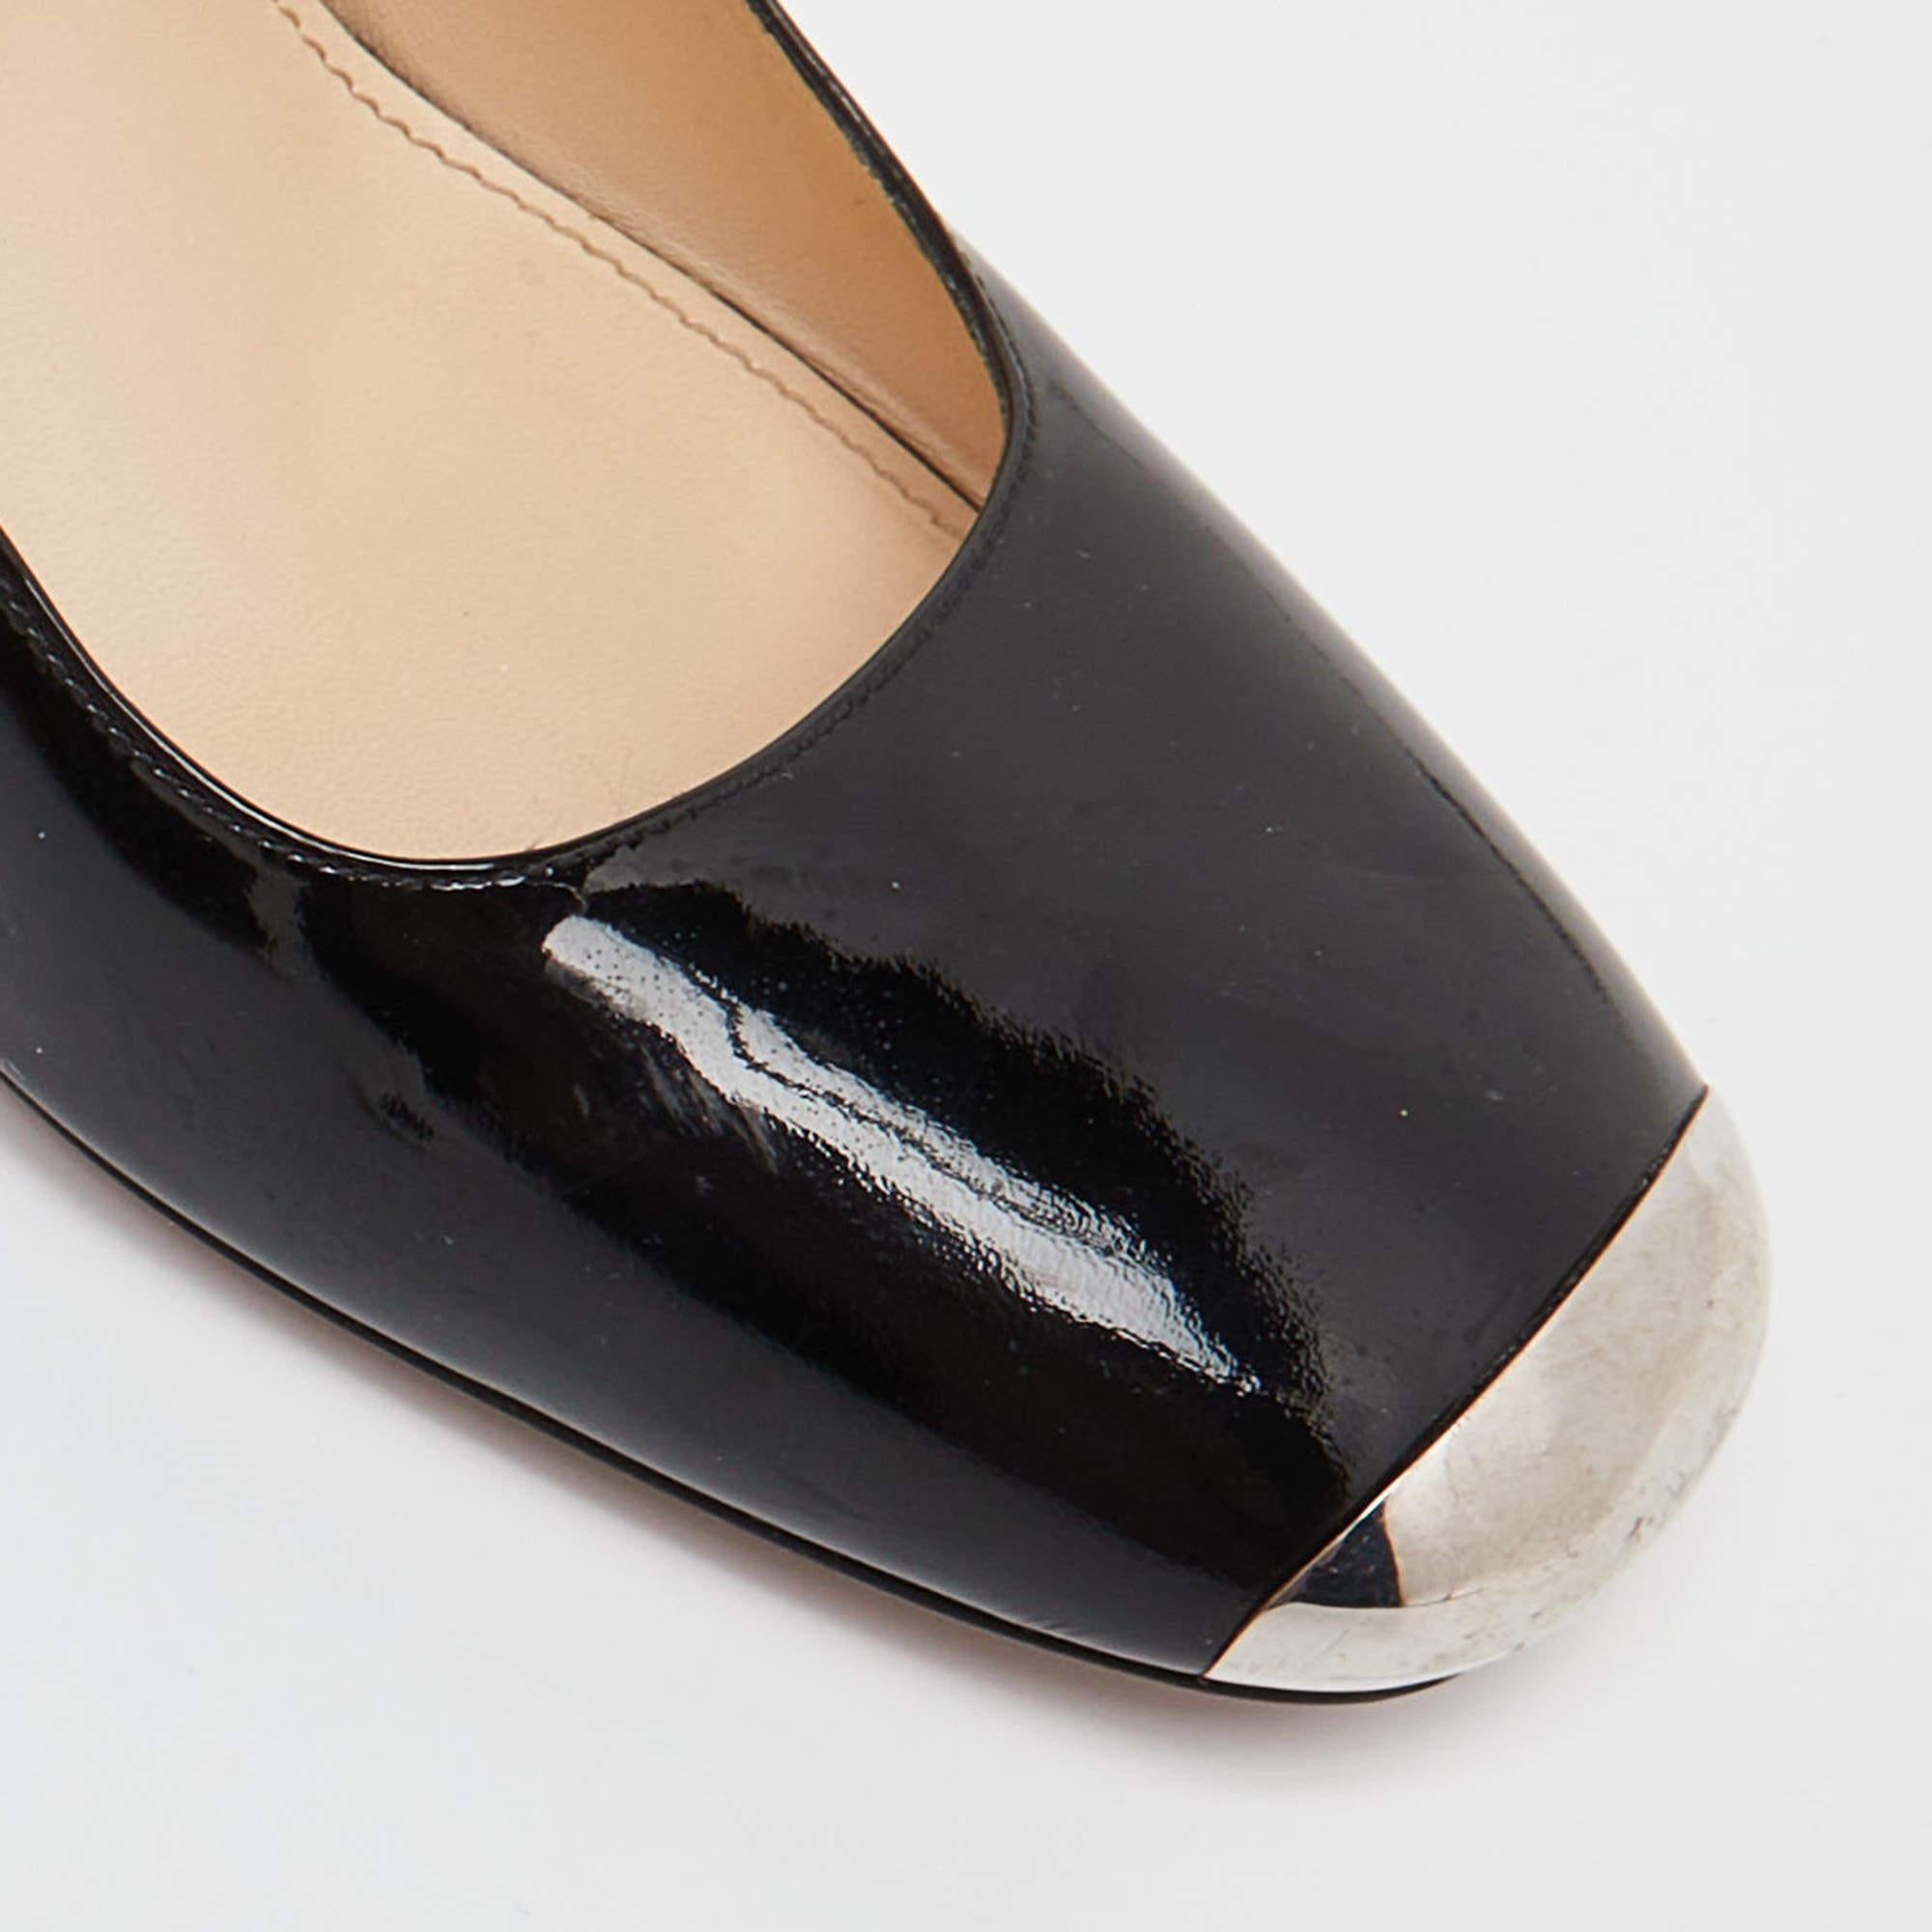 Prada Black Patent Leather Square Toe Block Heel Pumps Size 41 2